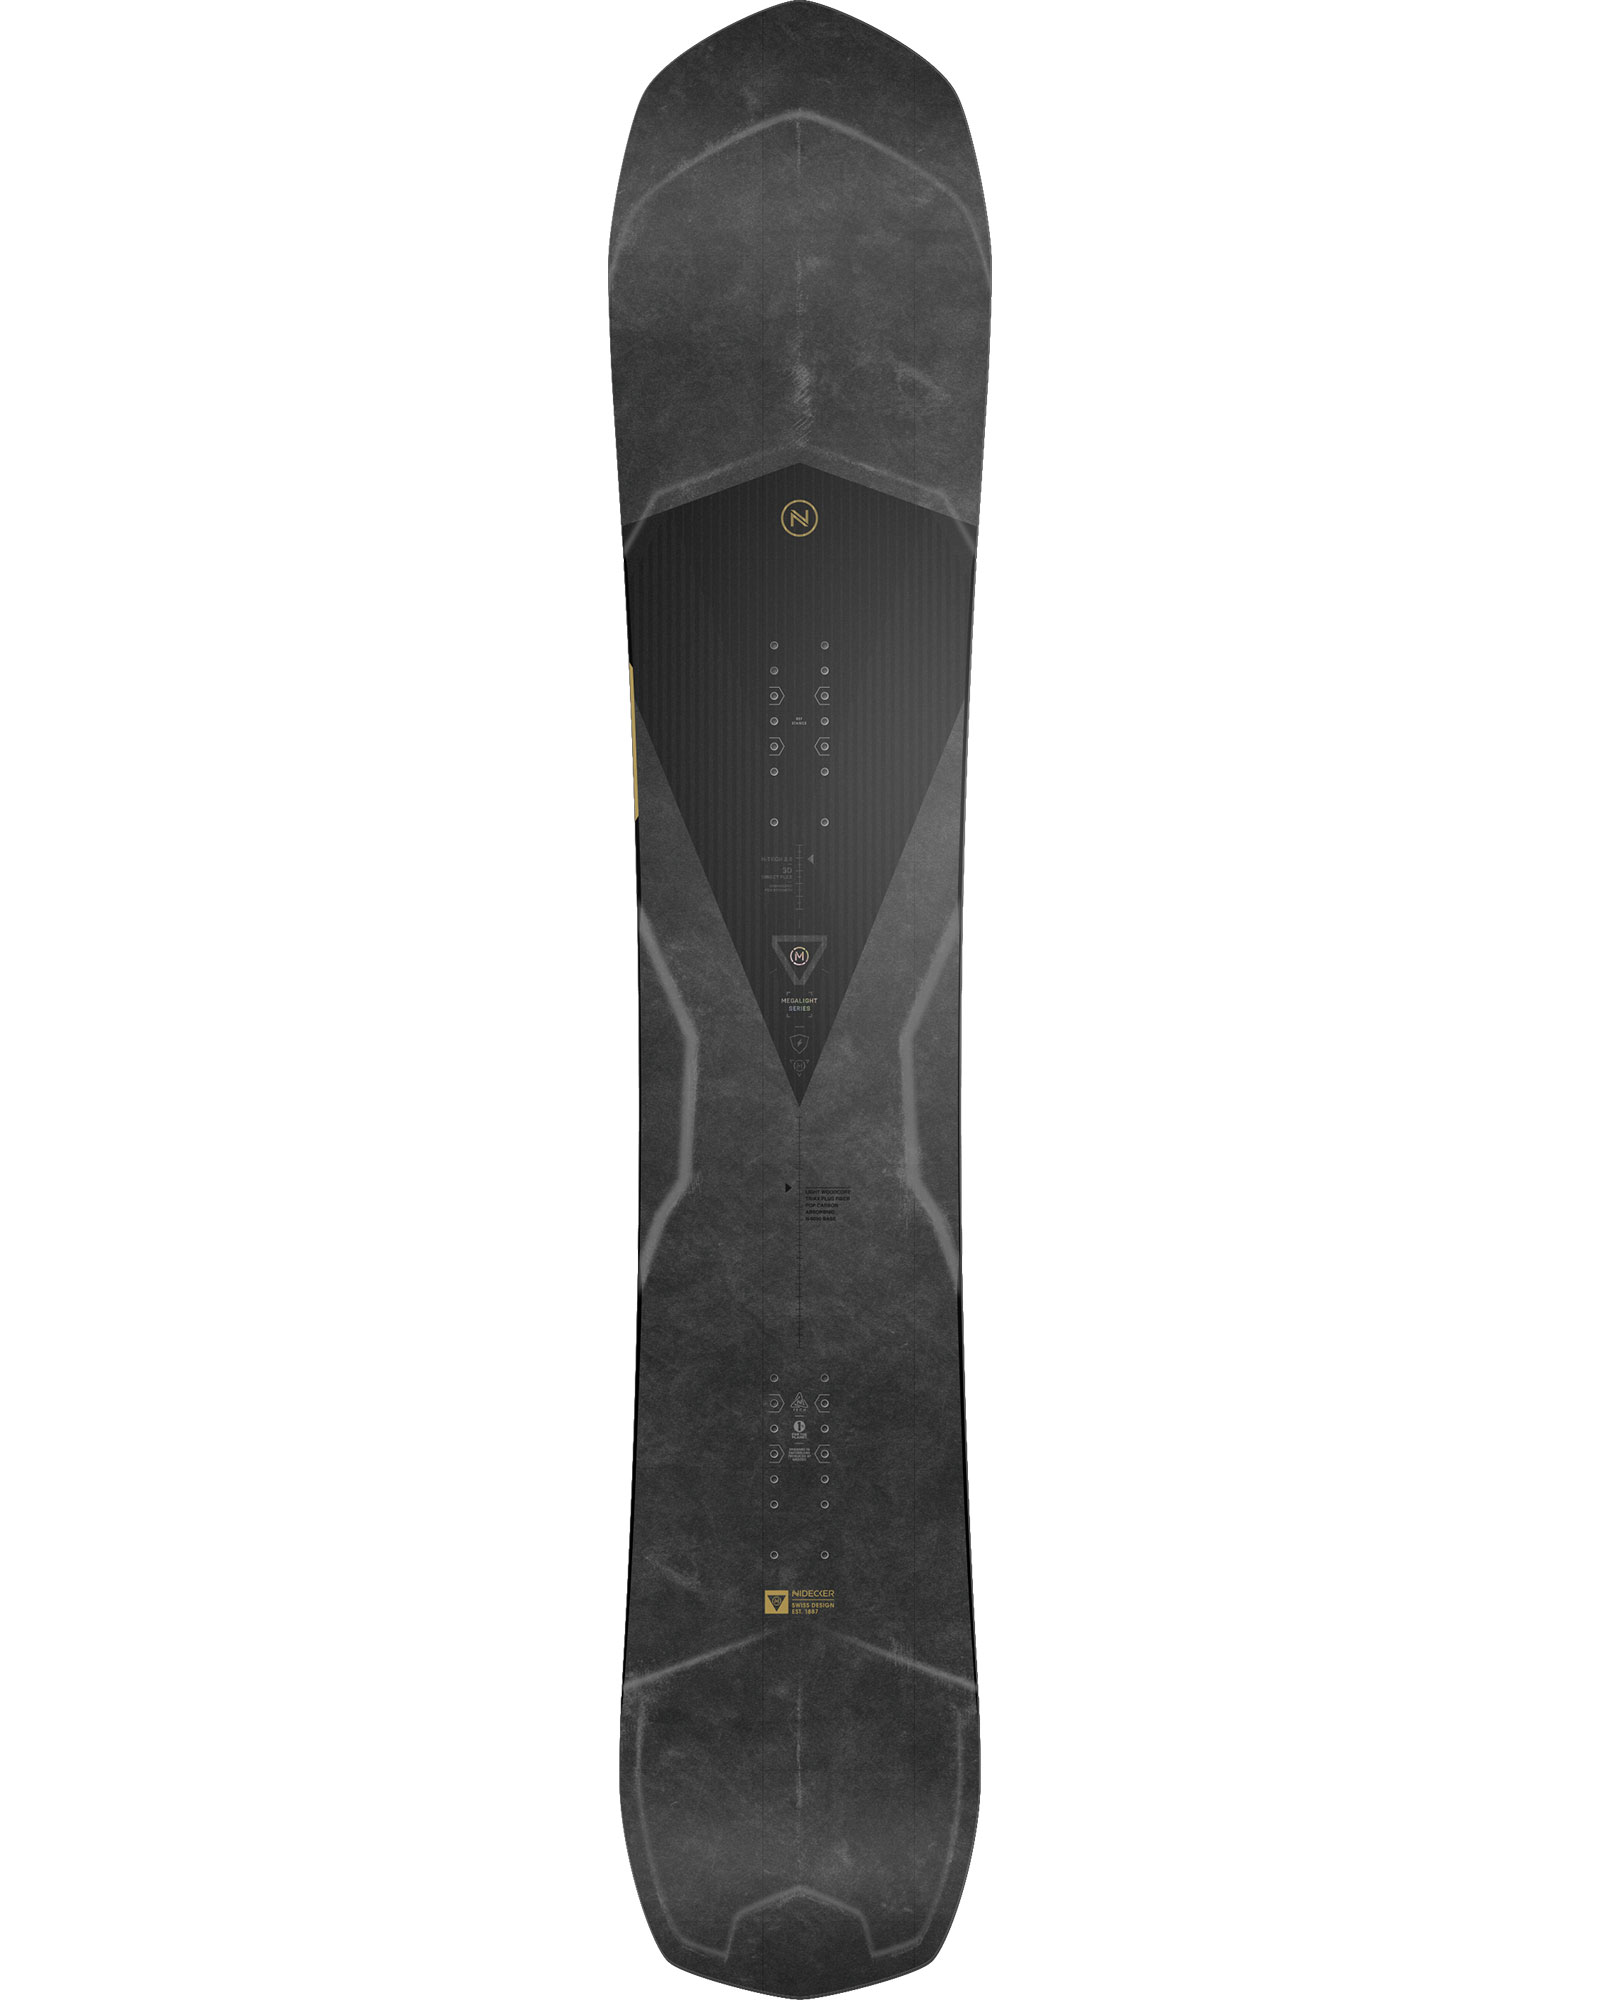 Nidecker Megalight Snowboard